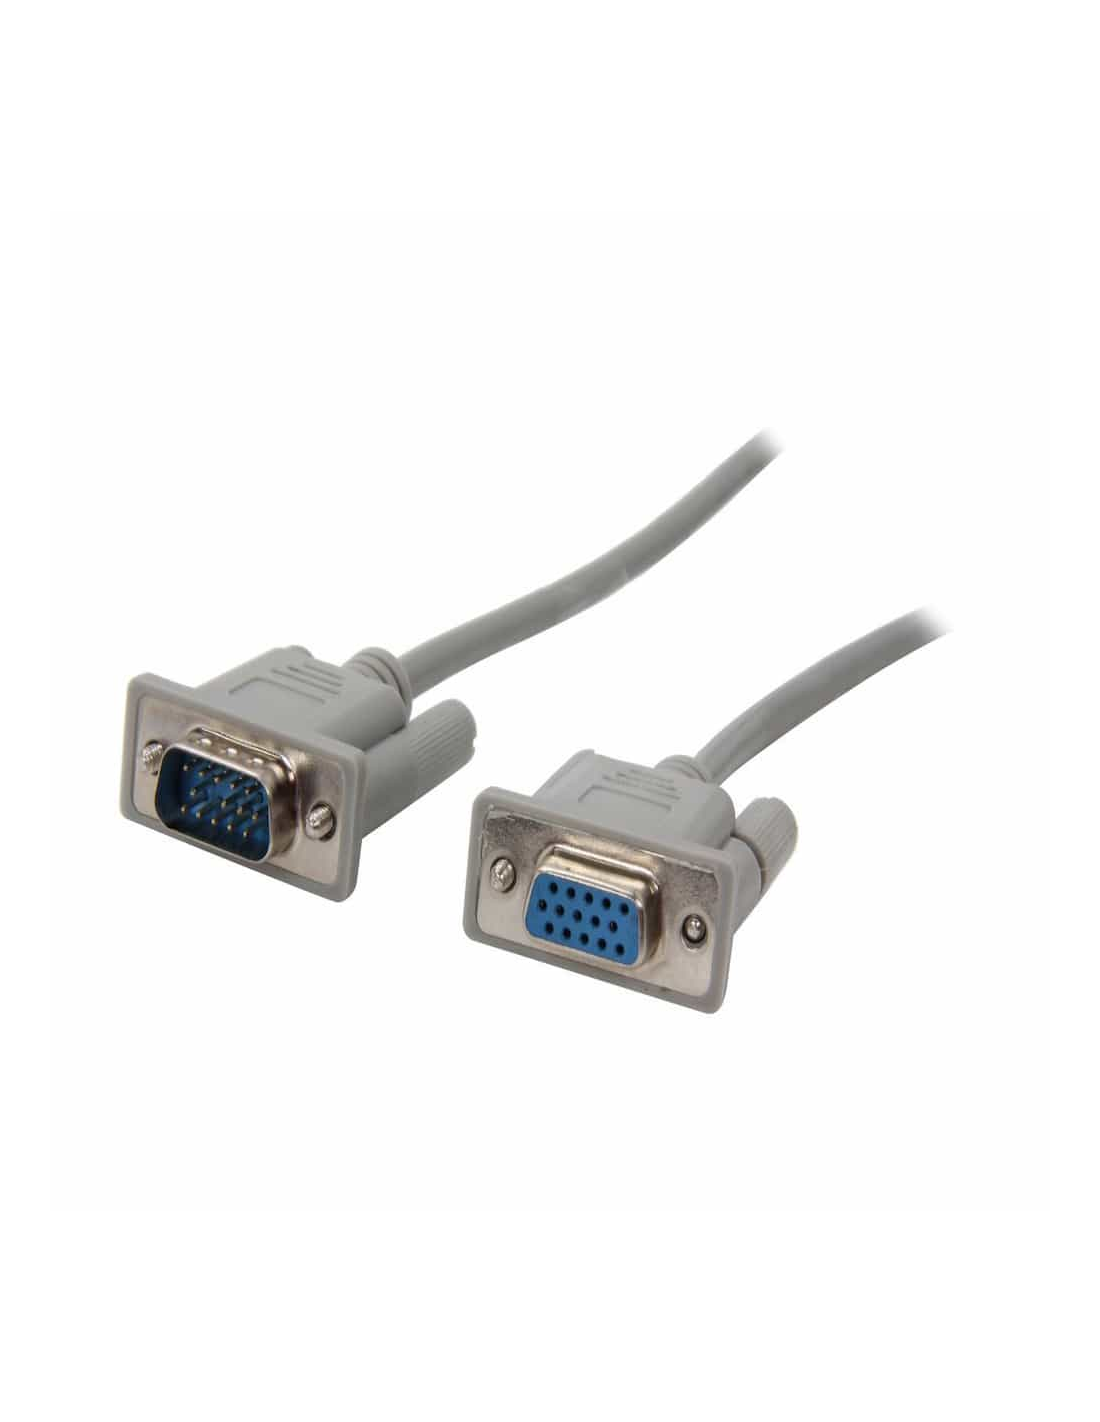 pérdida repetir Numérico Comprar Cable VGA extension 3 metros MXT10110 - Telematic Online